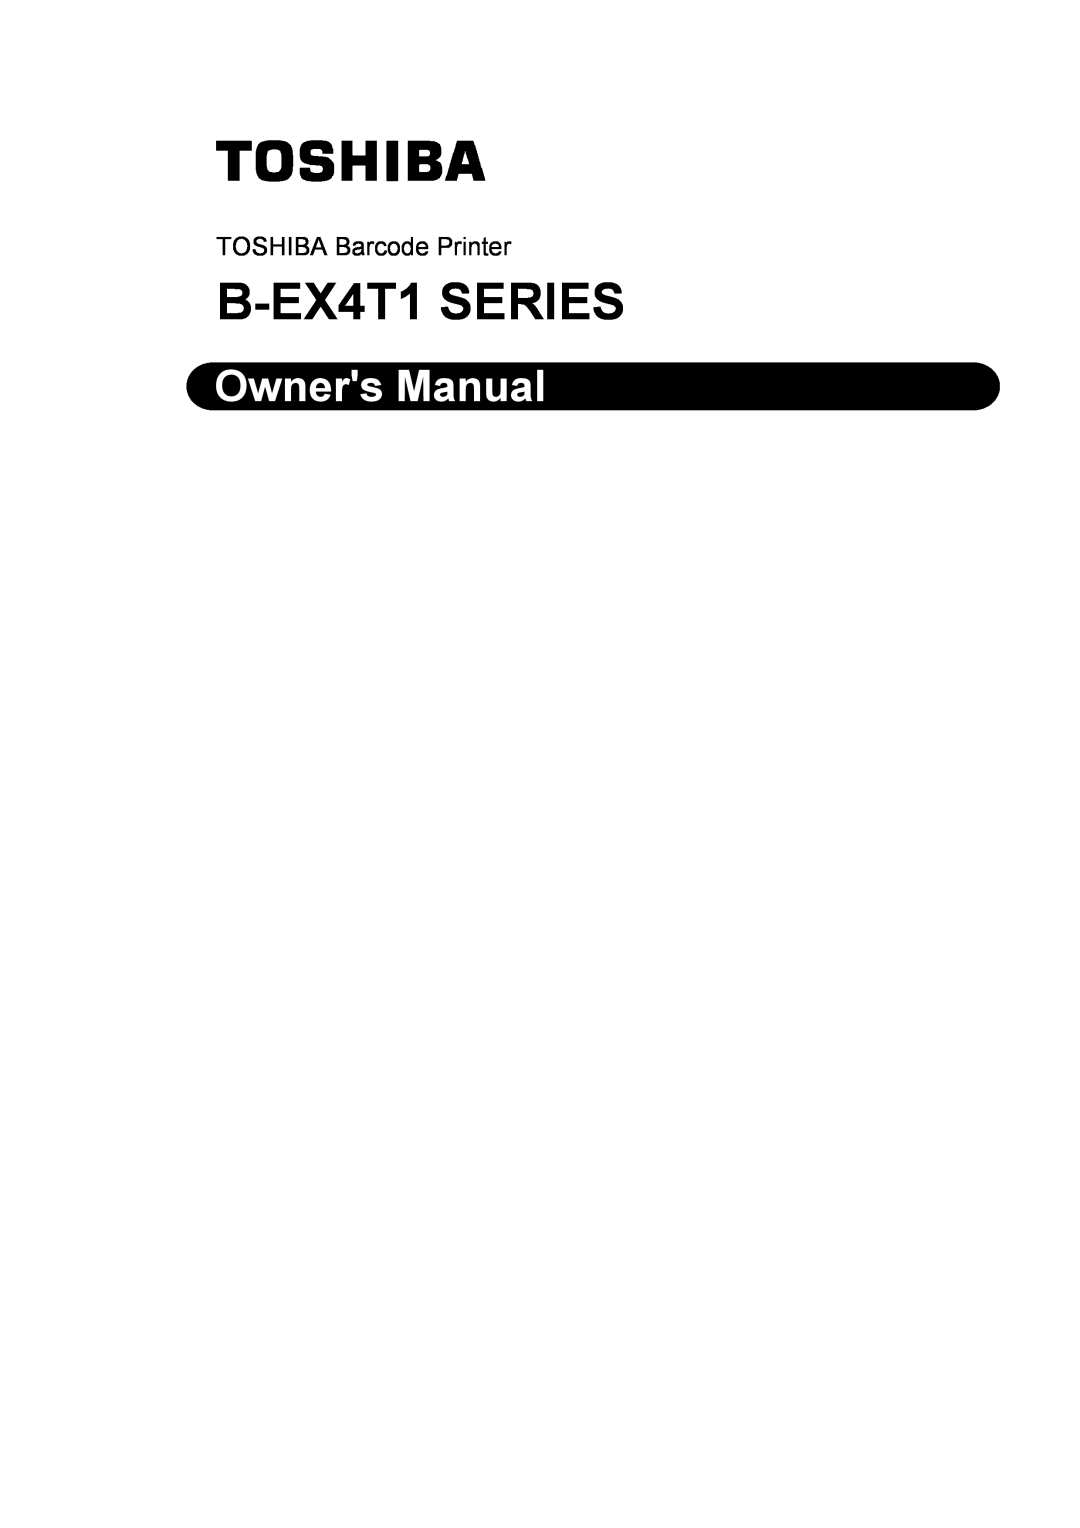 Toshiba manual B-EX4T1 SERIES, Owners Manual, TOSHIBA Barcode Printer 